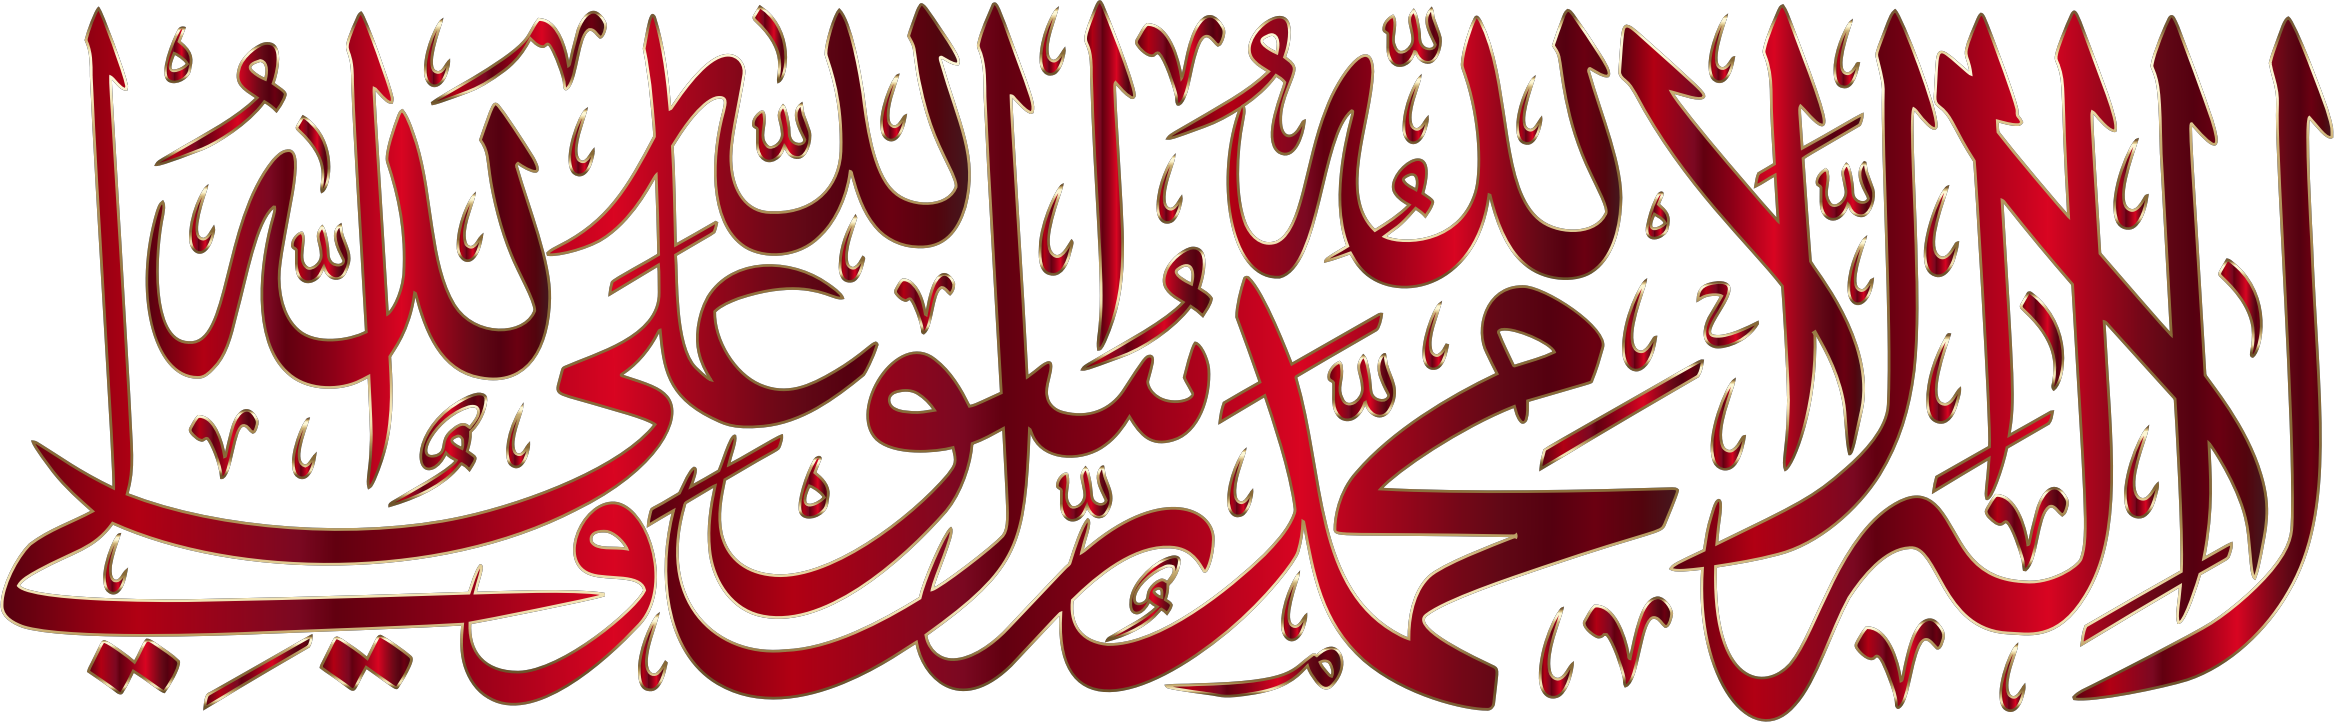 Crimson shahada kalima no. E clipart calligraphy